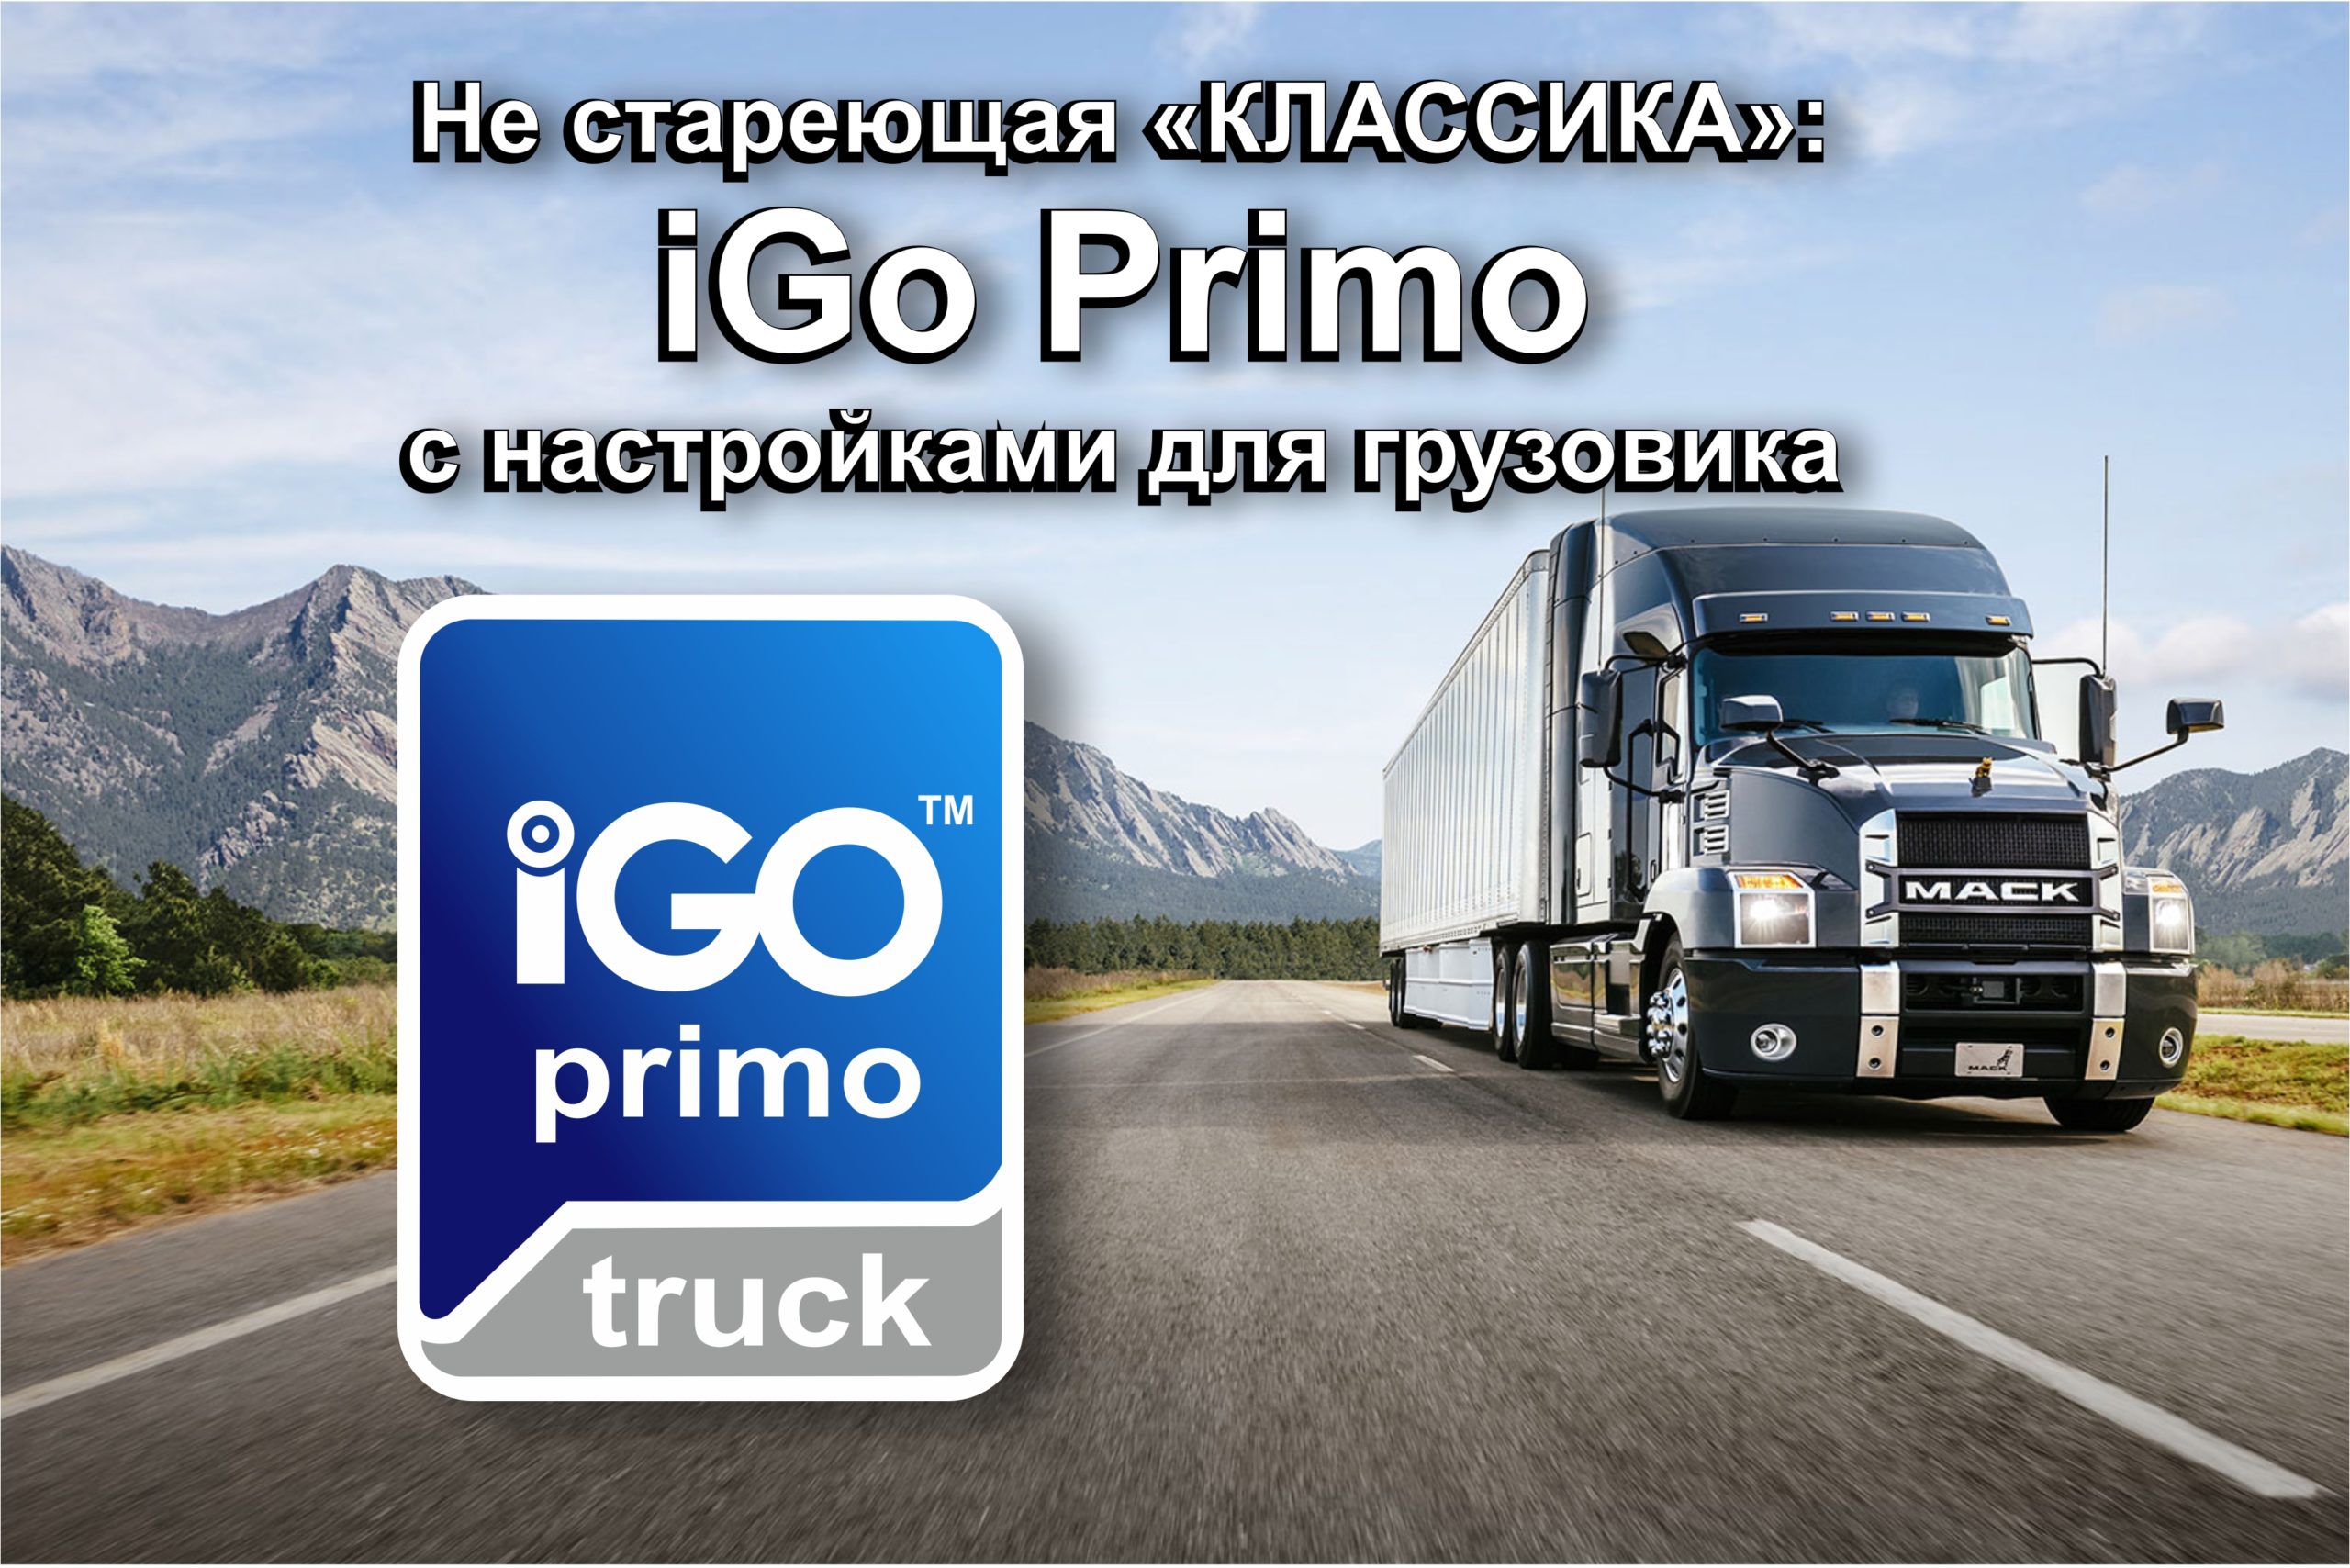 Приложения для грузовика. IGO primo для грузовиков. IGO primo для грузовиков на андроид. Фура леново. Грузовик самсунг.